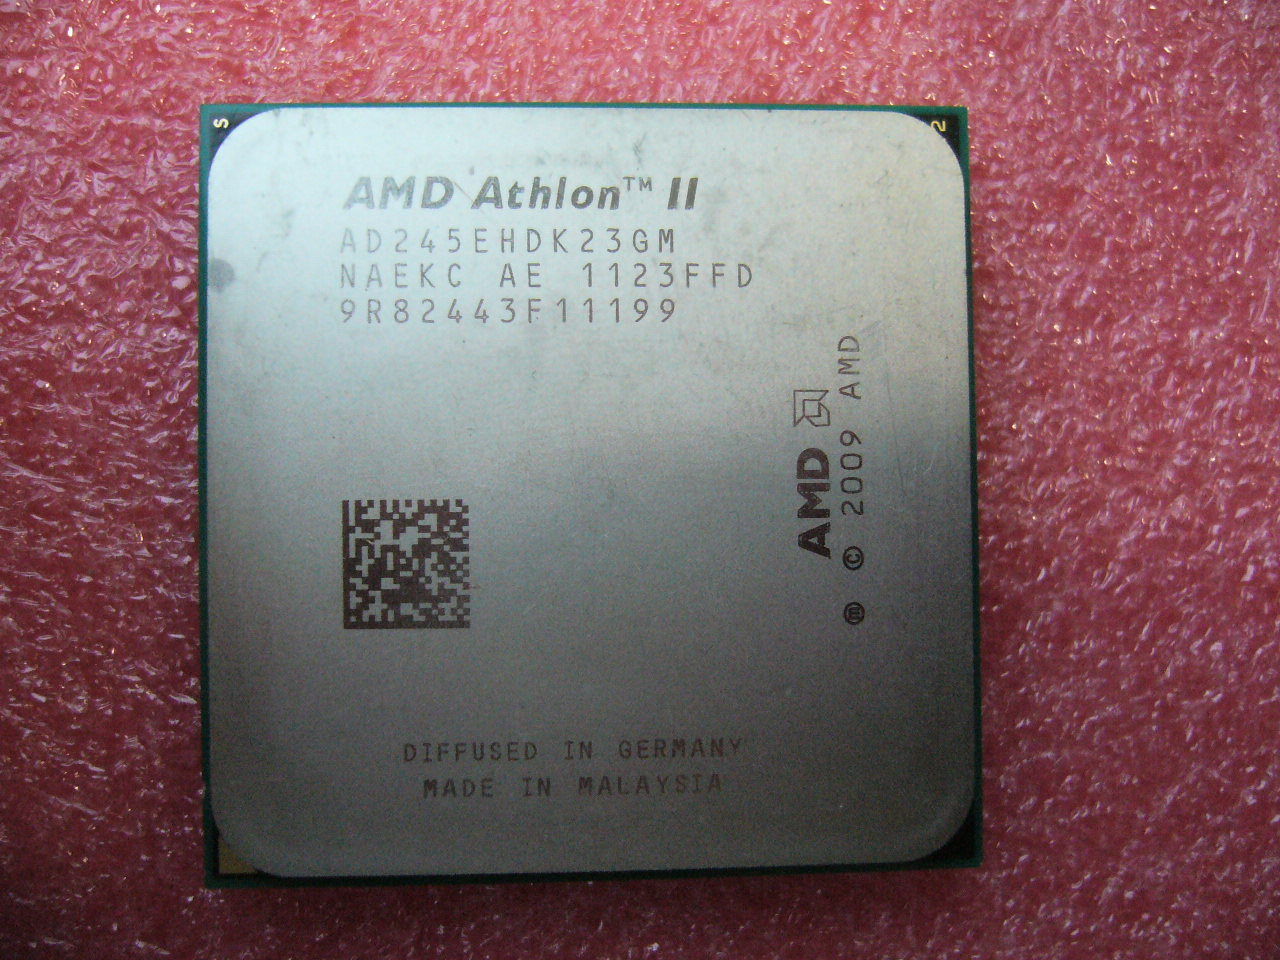 QTY 1x AMD Athlon II X2 245e 2.9 GHz Dual-Core (AD245EHDK23GM) CPU AM3 45W - zum Schließen ins Bild klicken